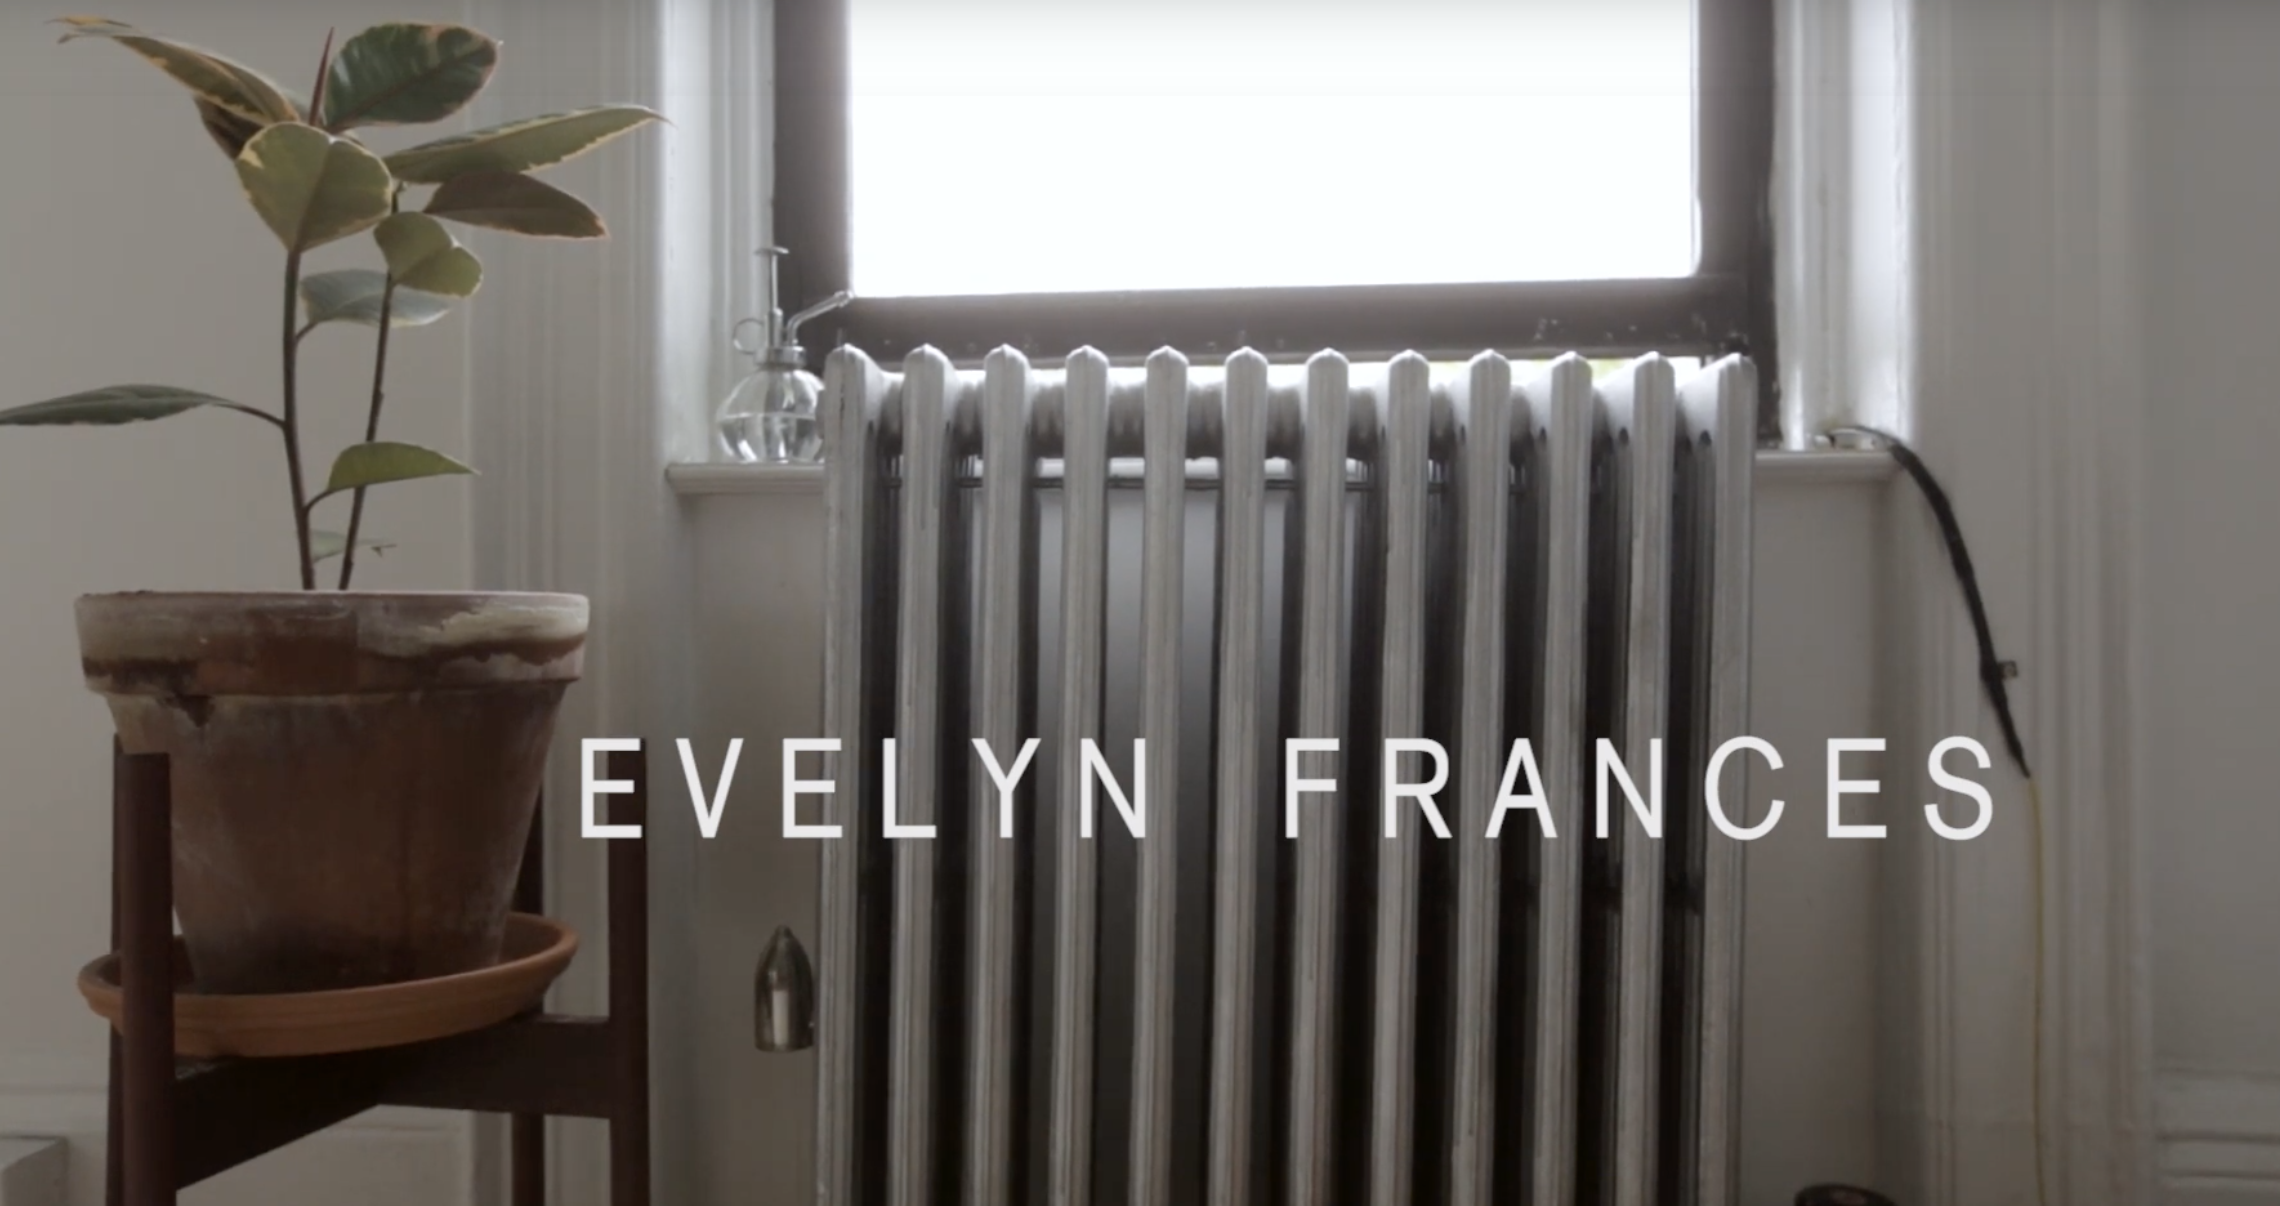 Sounds x Premiere: Evelyn Frances Live Sessions